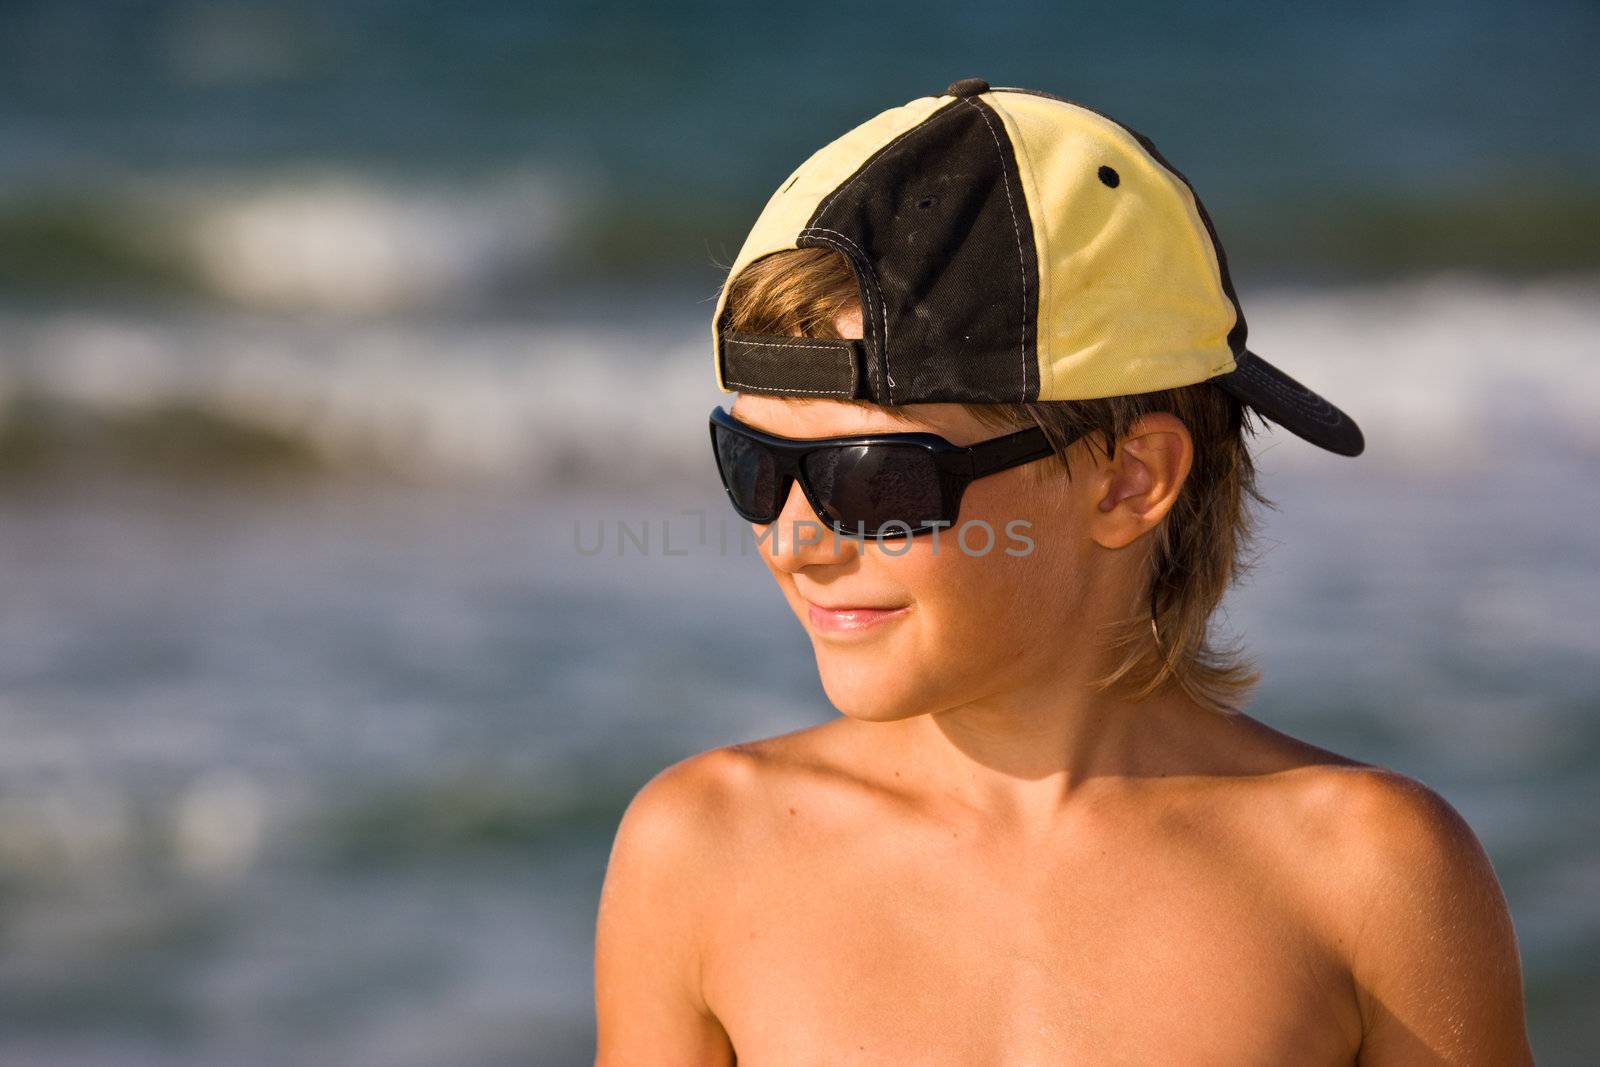 people series: portarit of boy on summer sea beach